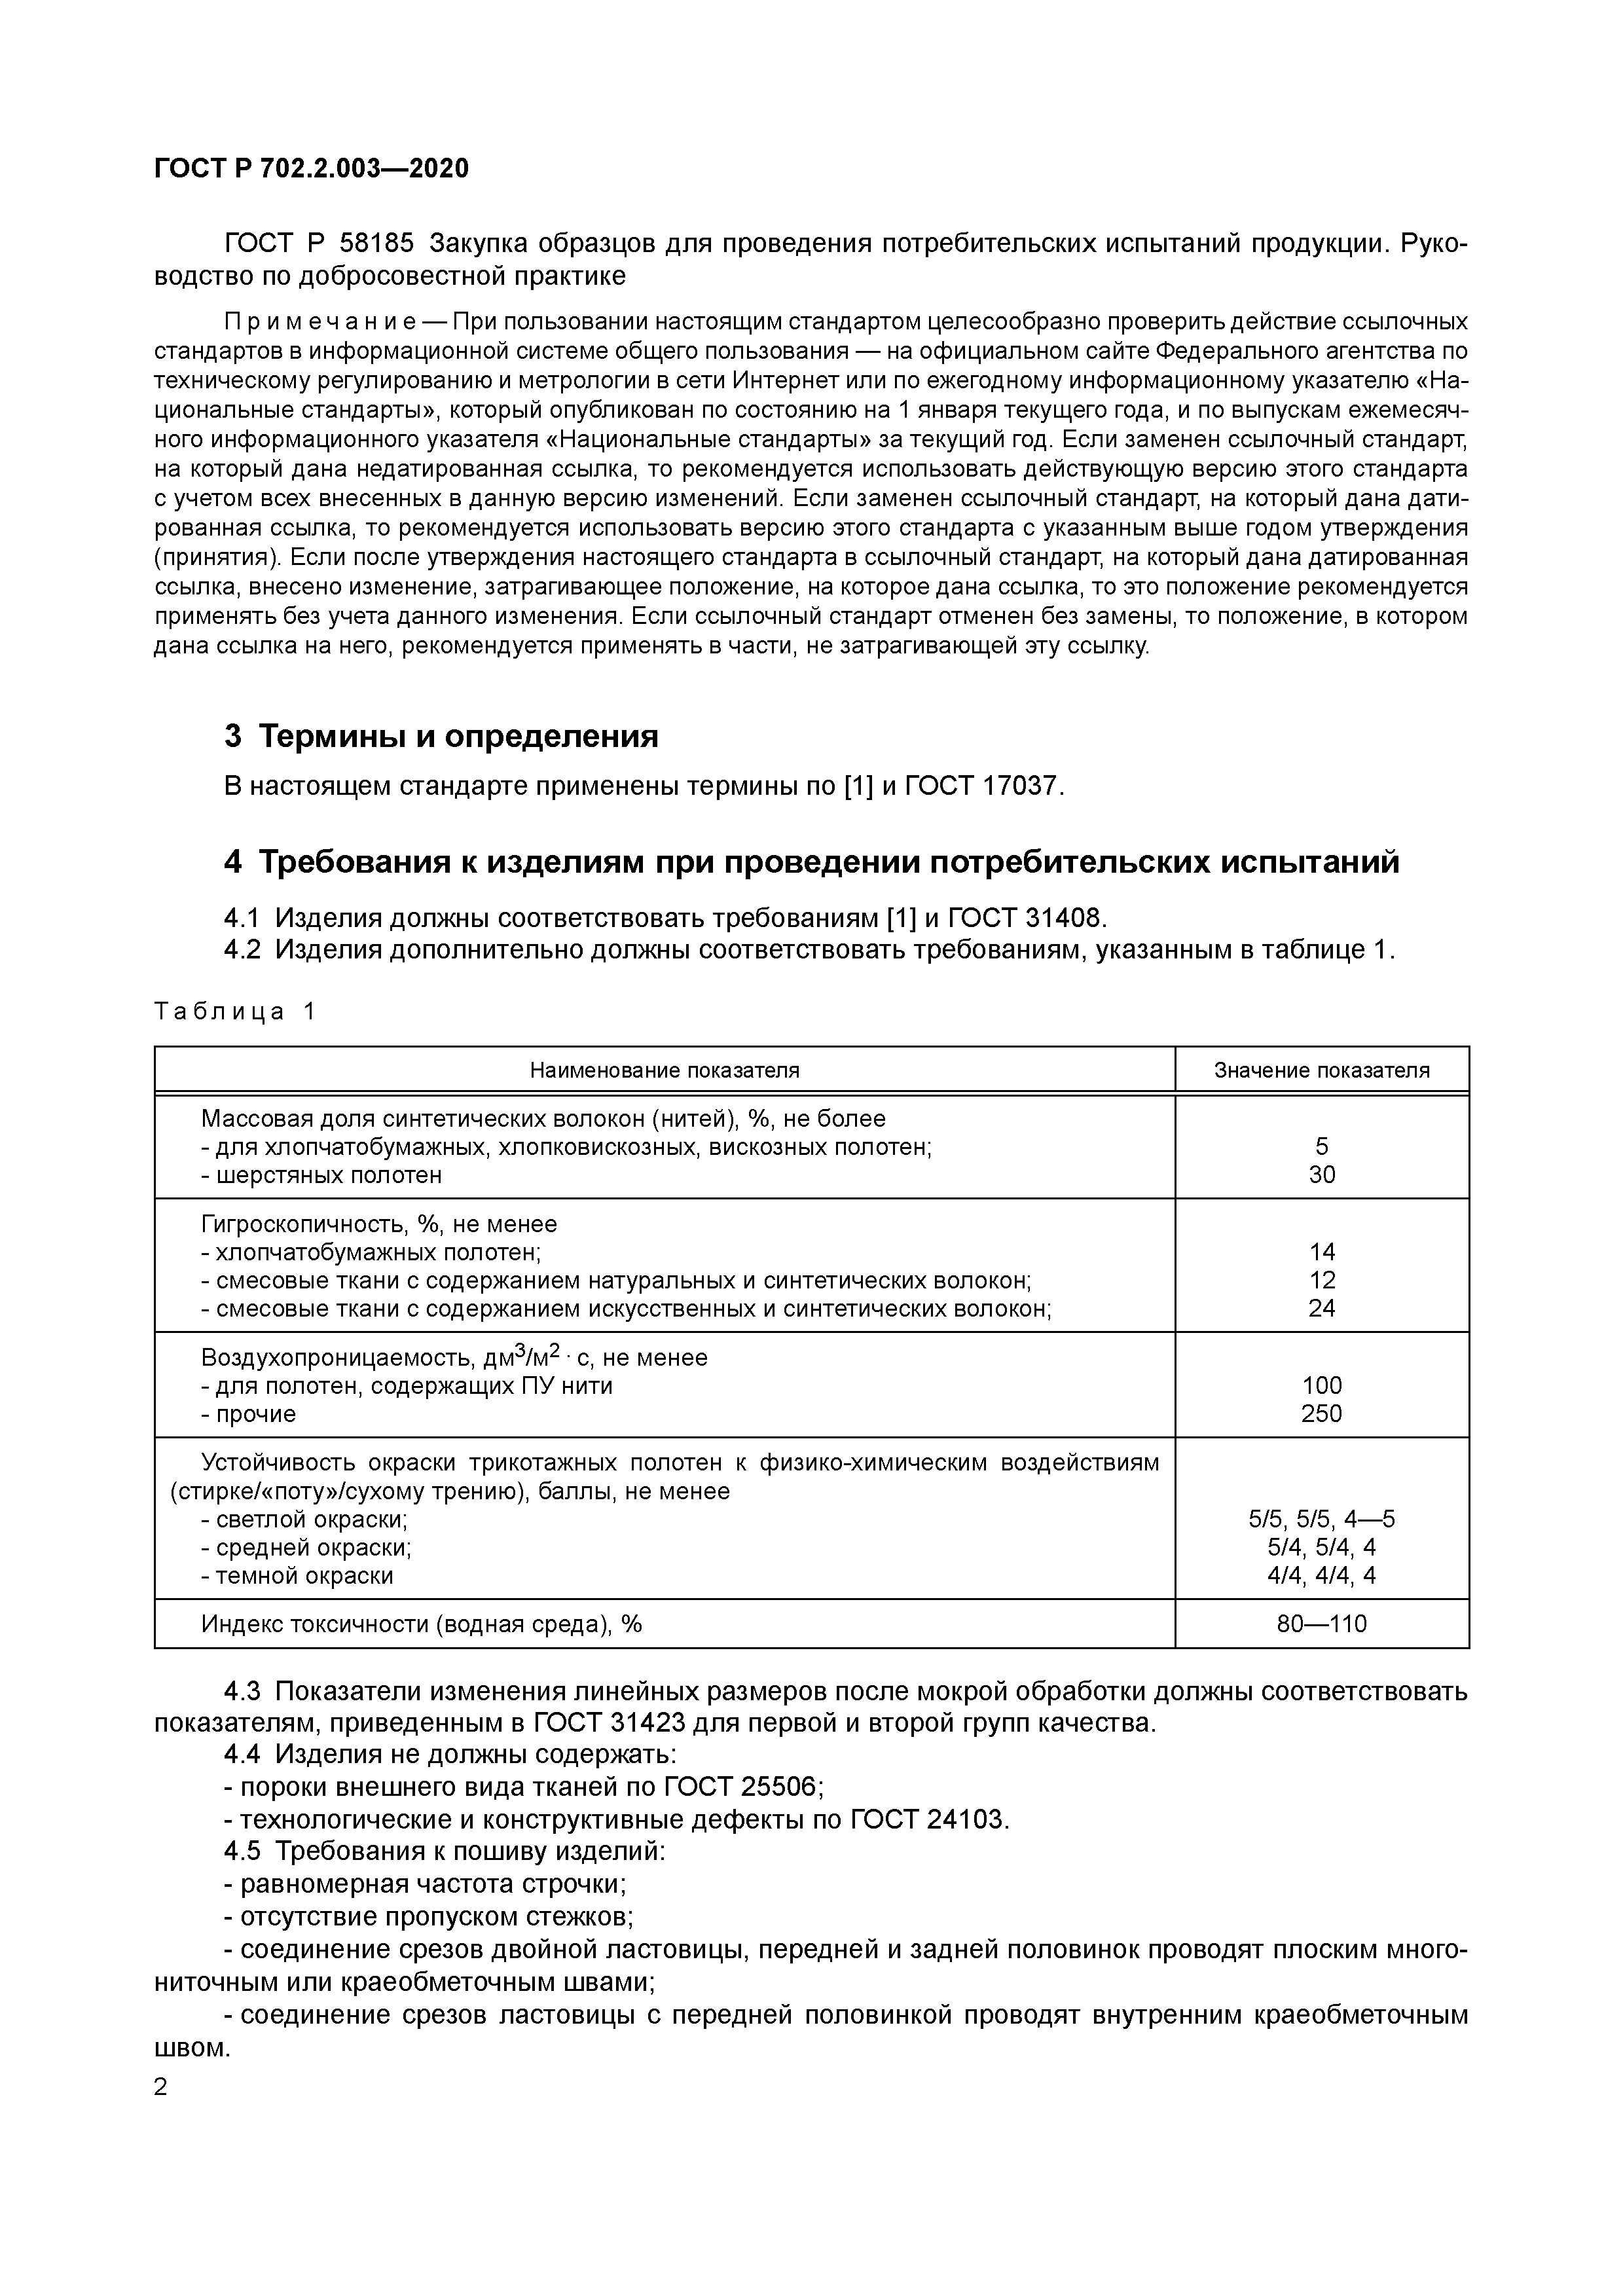 ГОСТ Р 702.2.003-2020